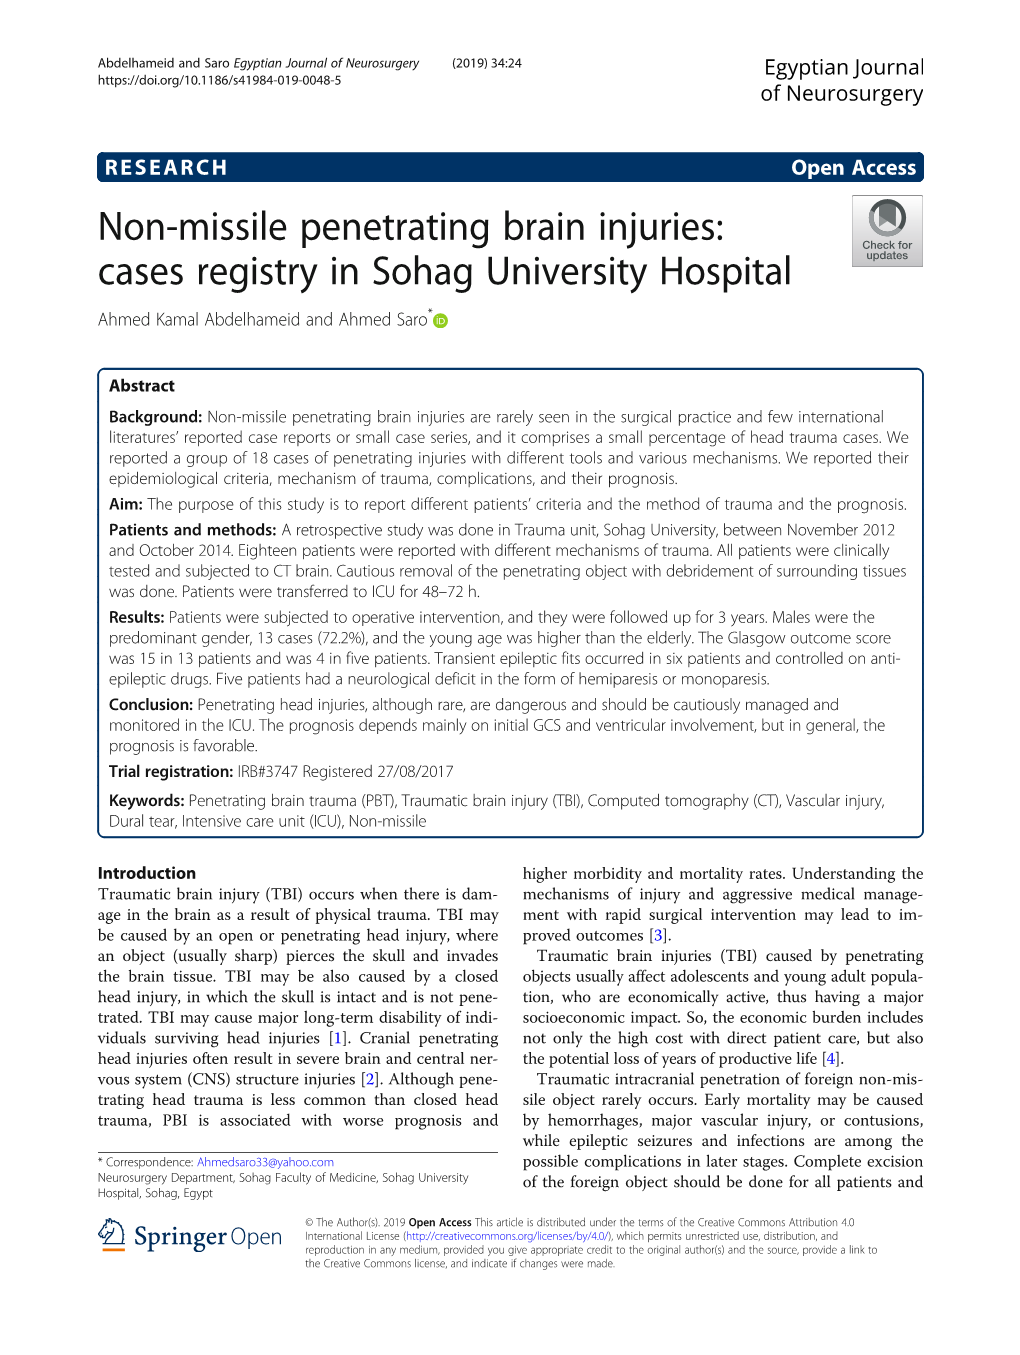 Non-Missile Penetrating Brain Injuries: Cases Registry in Sohag University Hospital Ahmed Kamal Abdelhameid and Ahmed Saro*